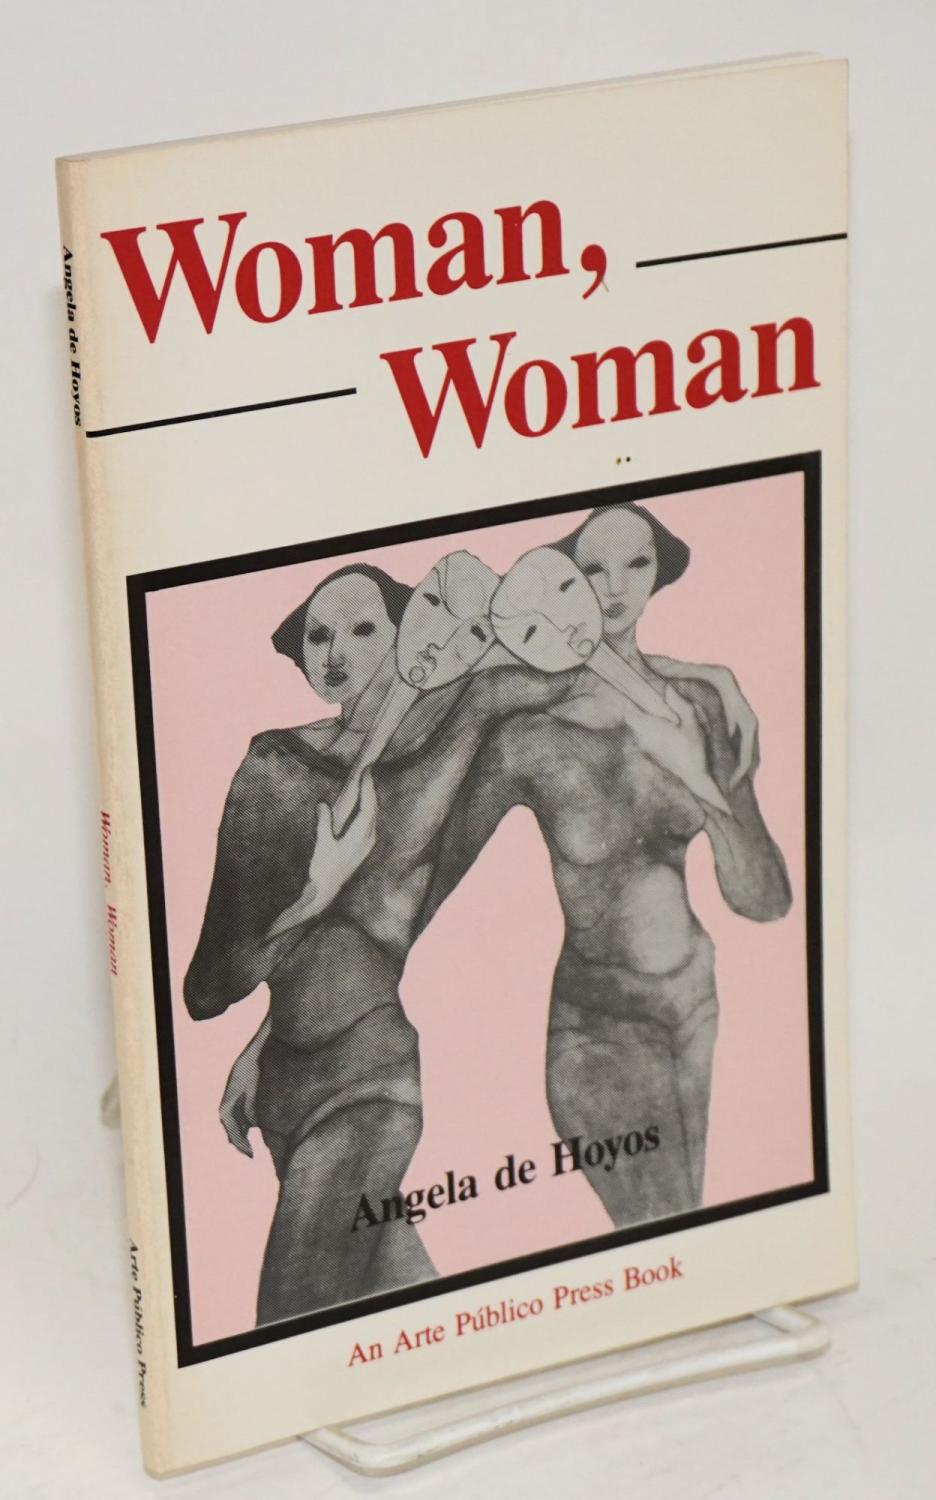 Woman, woman - Hoyos, Angela de, introduction by Rolando Hinojosa